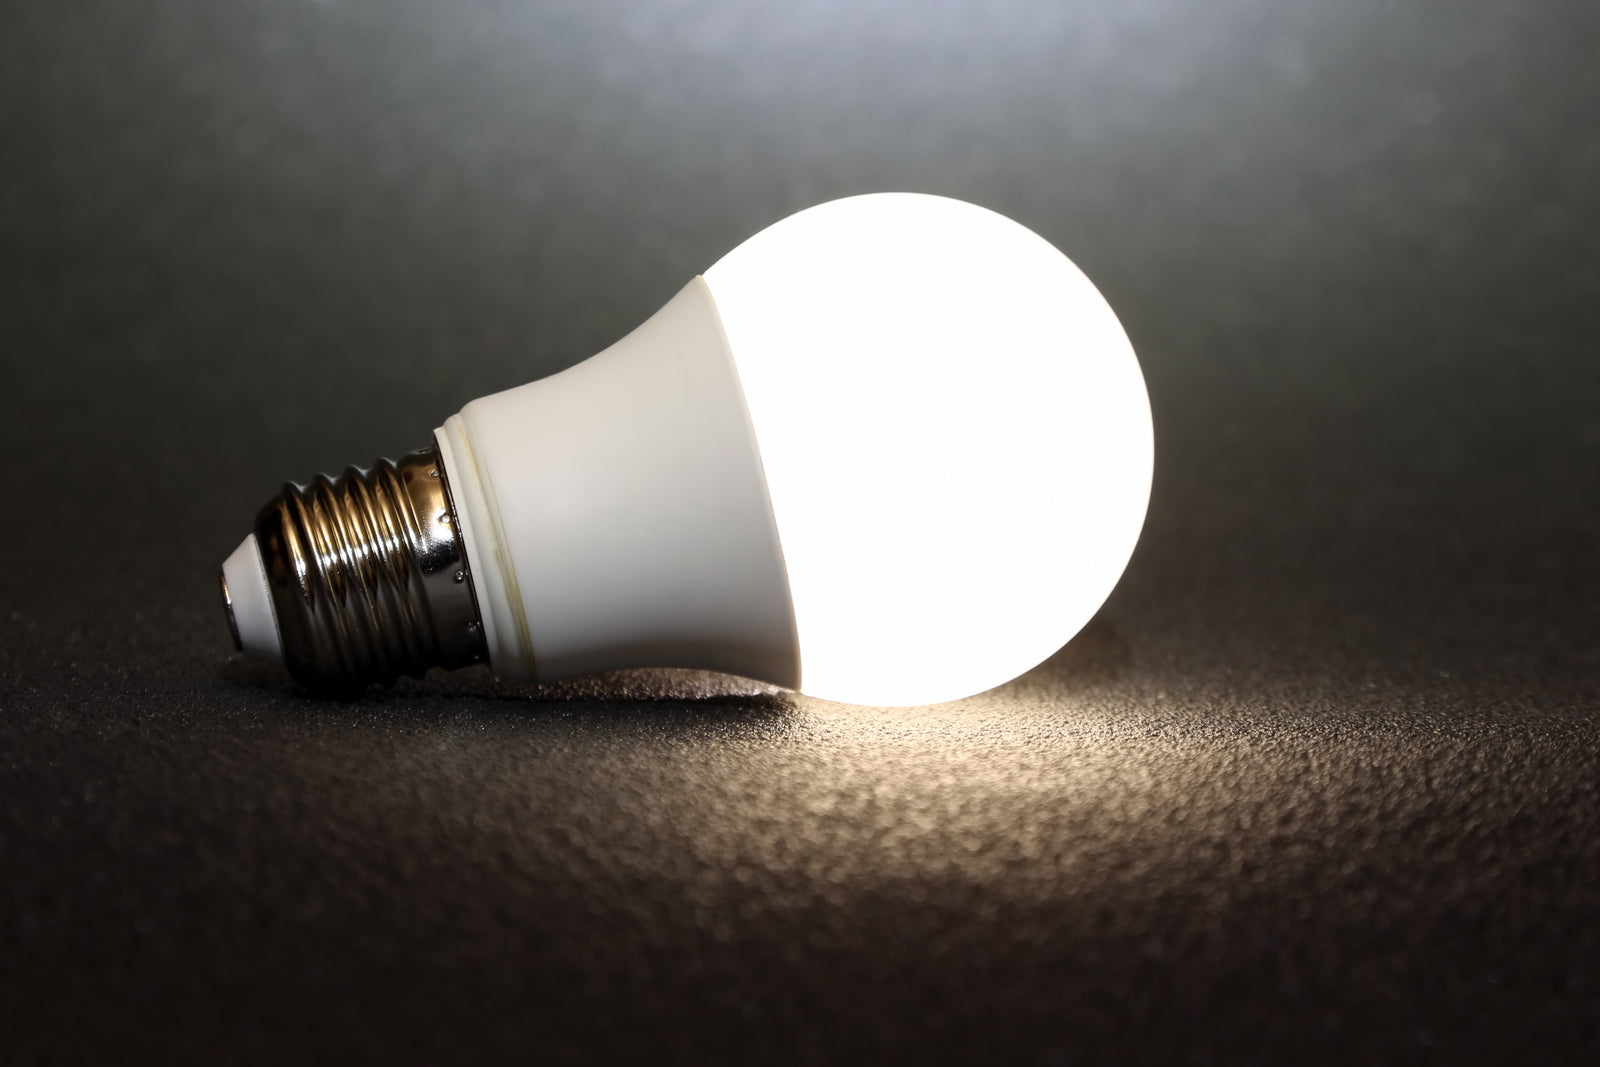 LED light bulbs for your bedroom